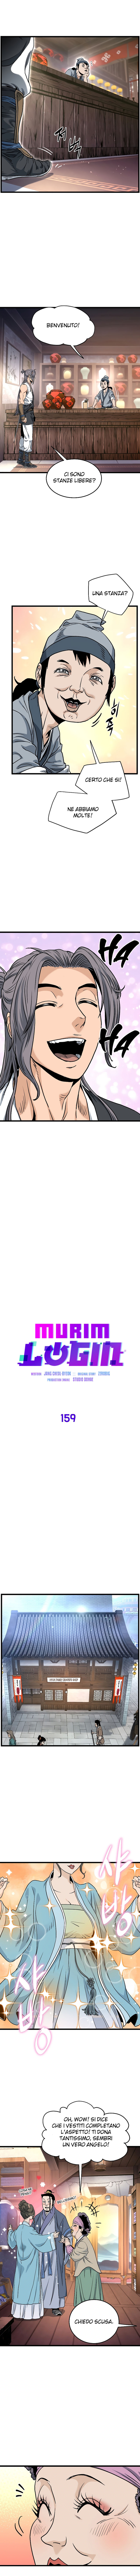 Murim Login - ch 159 Zeurel